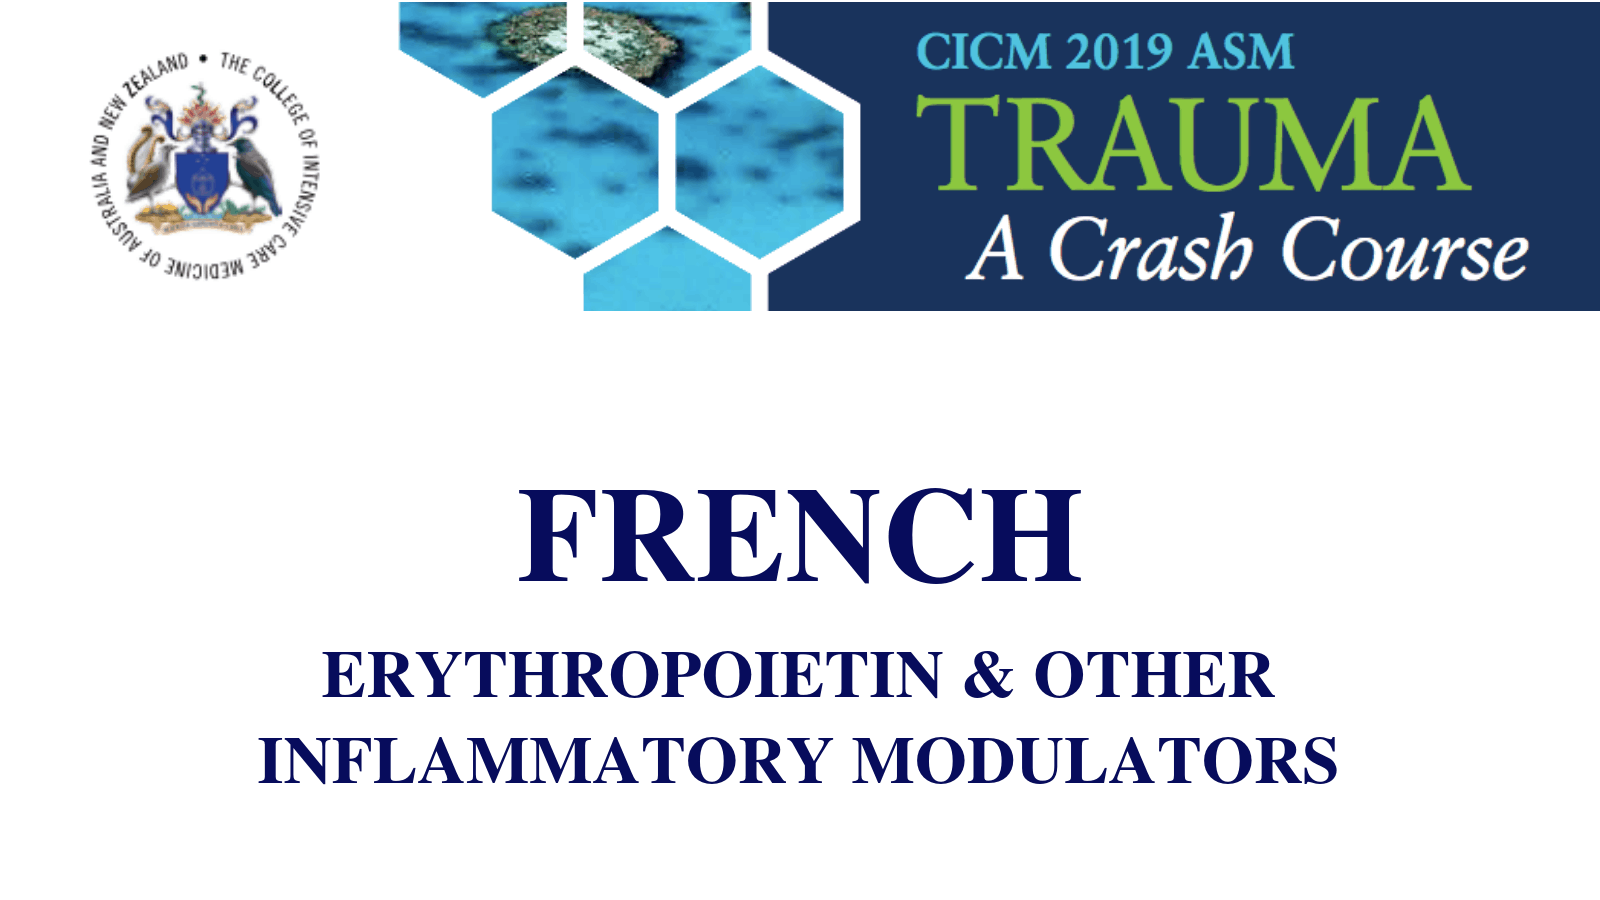 Erythropoietin & other inflammatory modulators